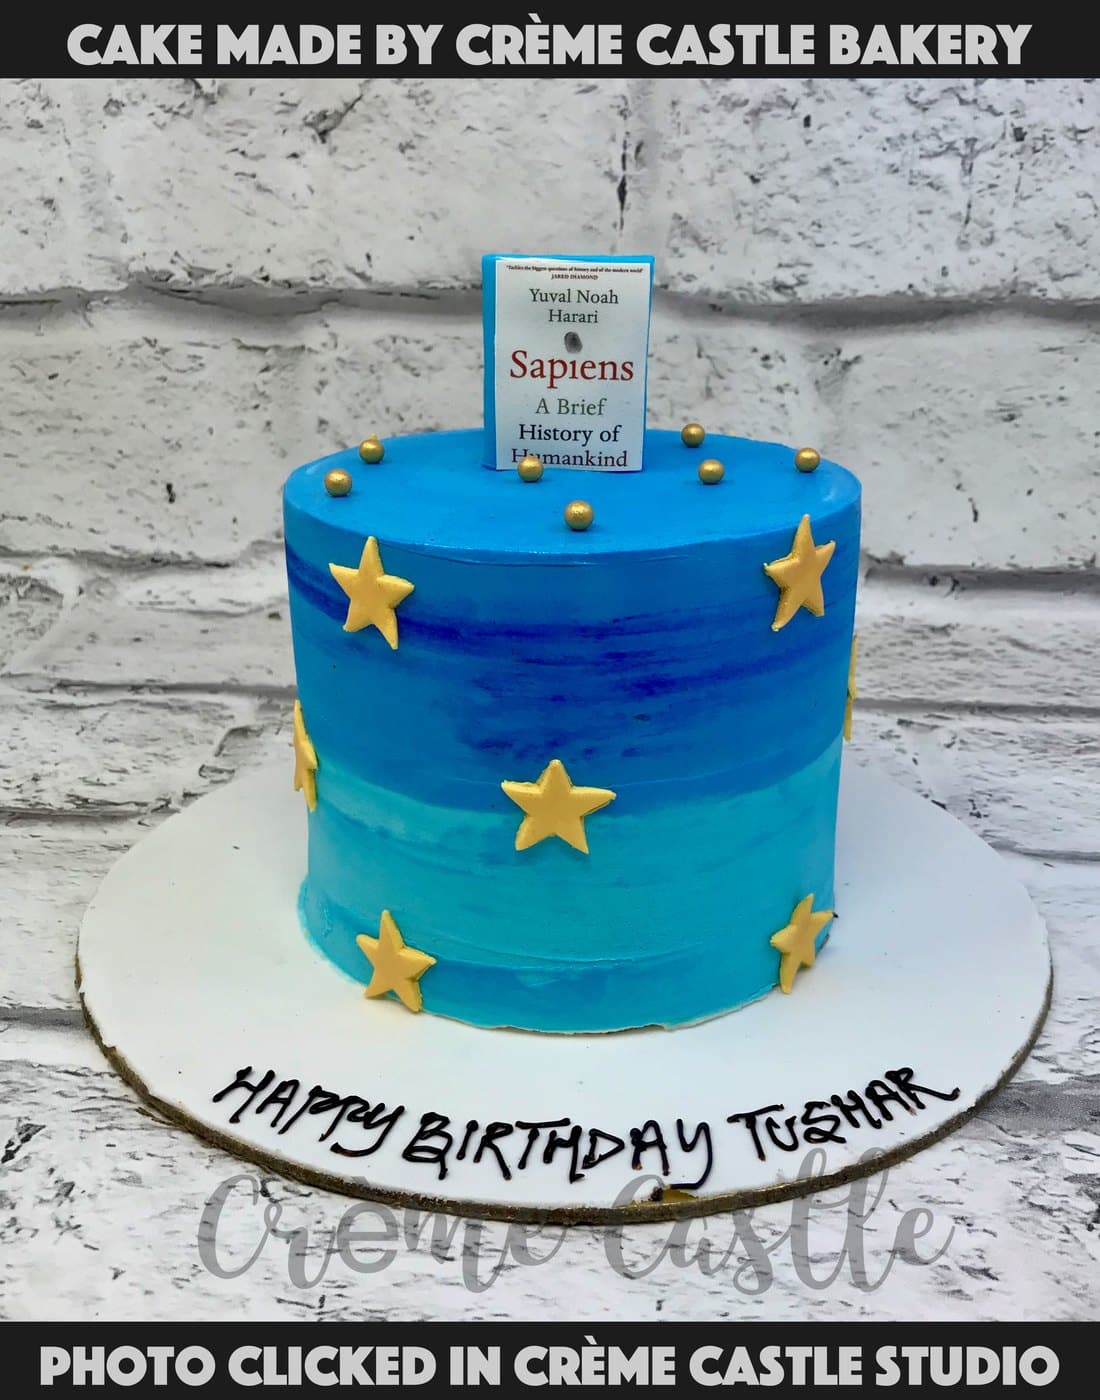 Happy Birthday Tushar Cakes, Cards, Wishes